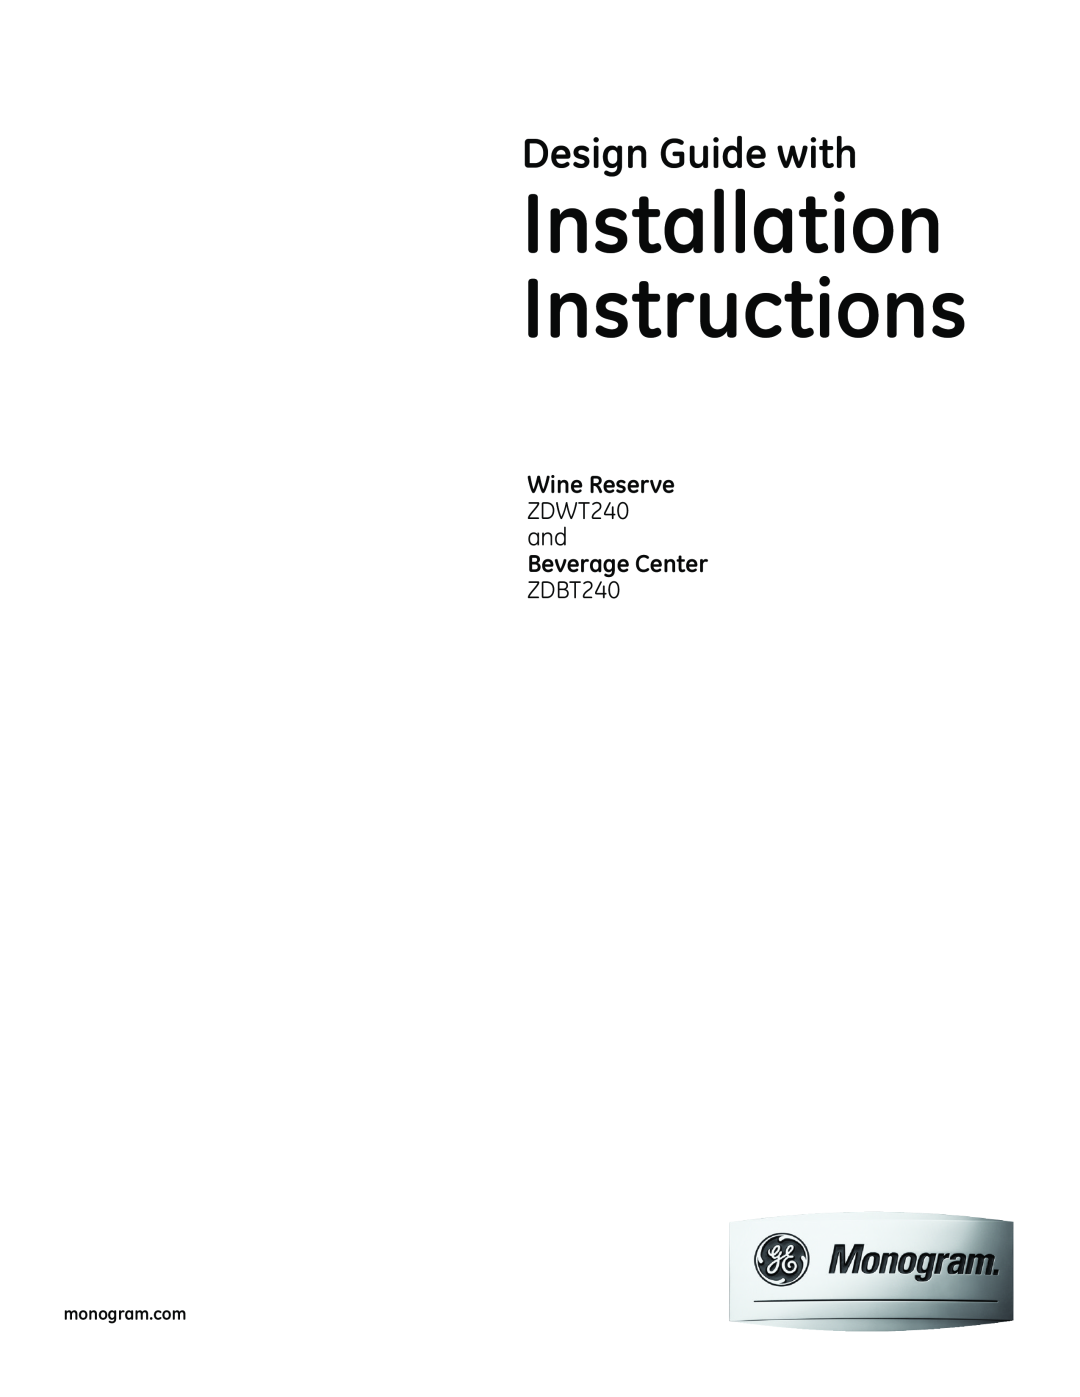 GE Monogram ZDBT240 installation instructions Beverage Center, Installation Instructions, Design Guide with 